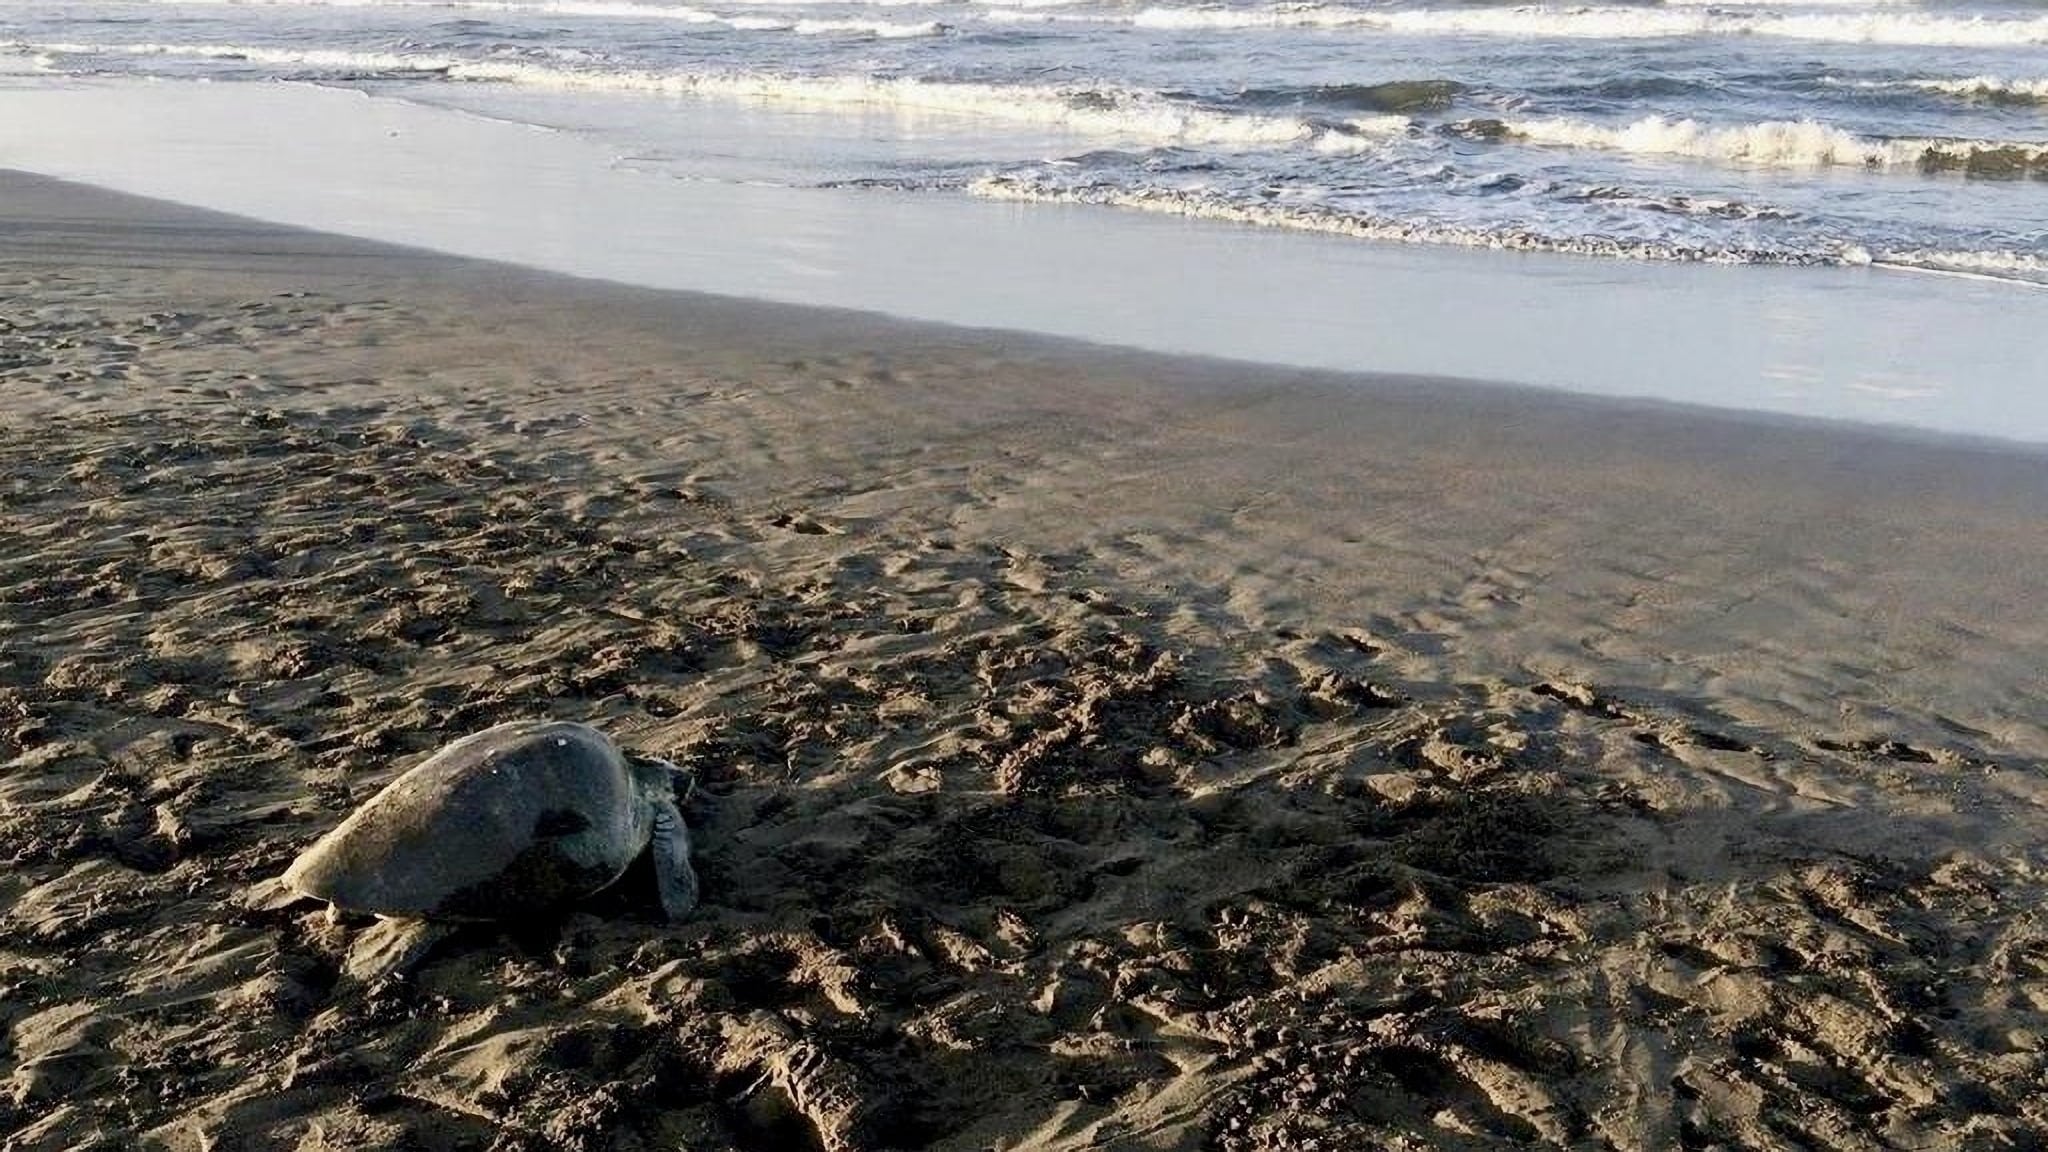 La vie secrète d'un nid de tortues marines (2019)